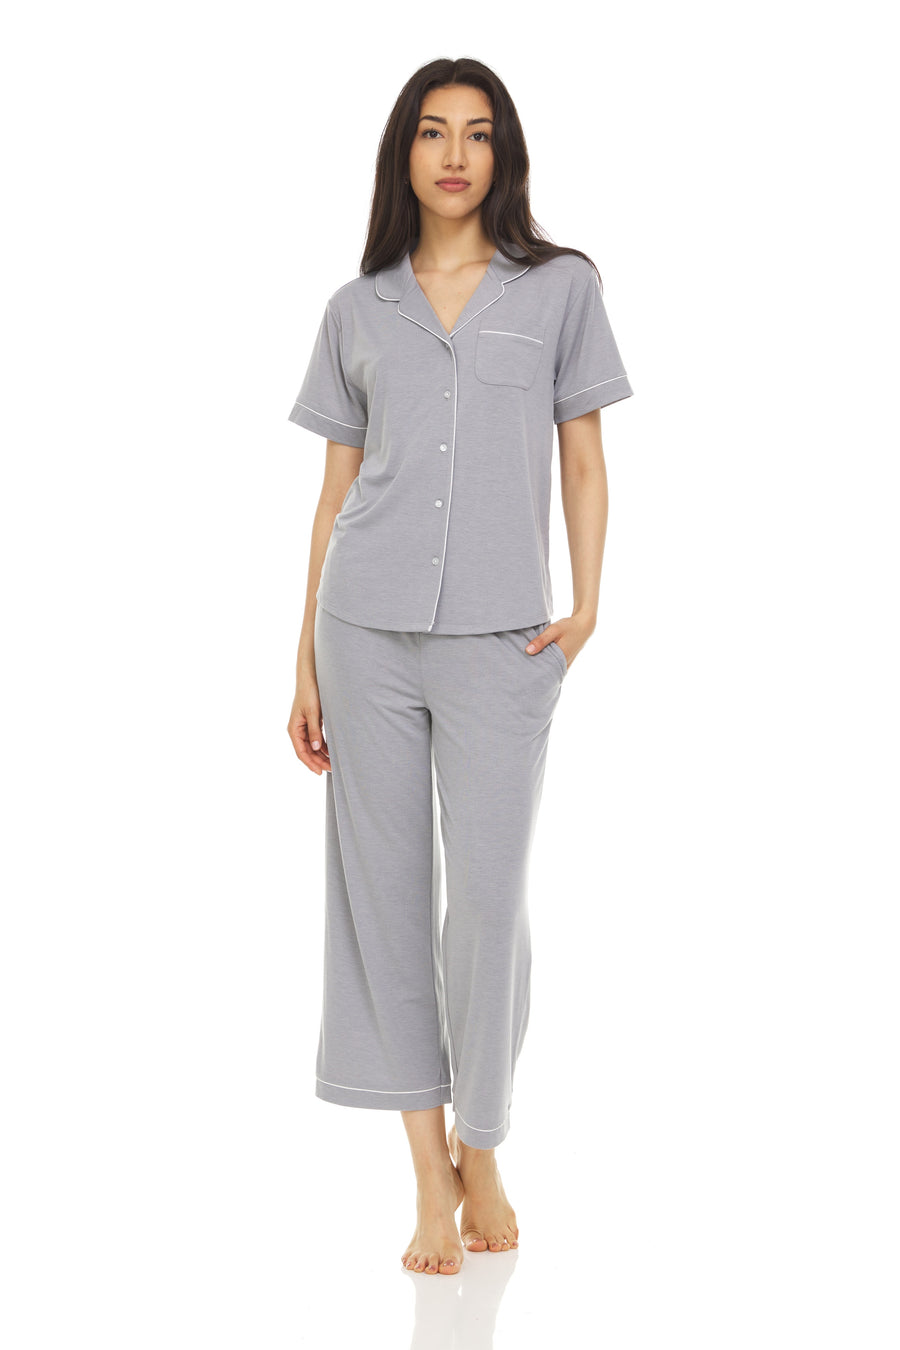 Lenora Women's Classic Capri Pajama Set –